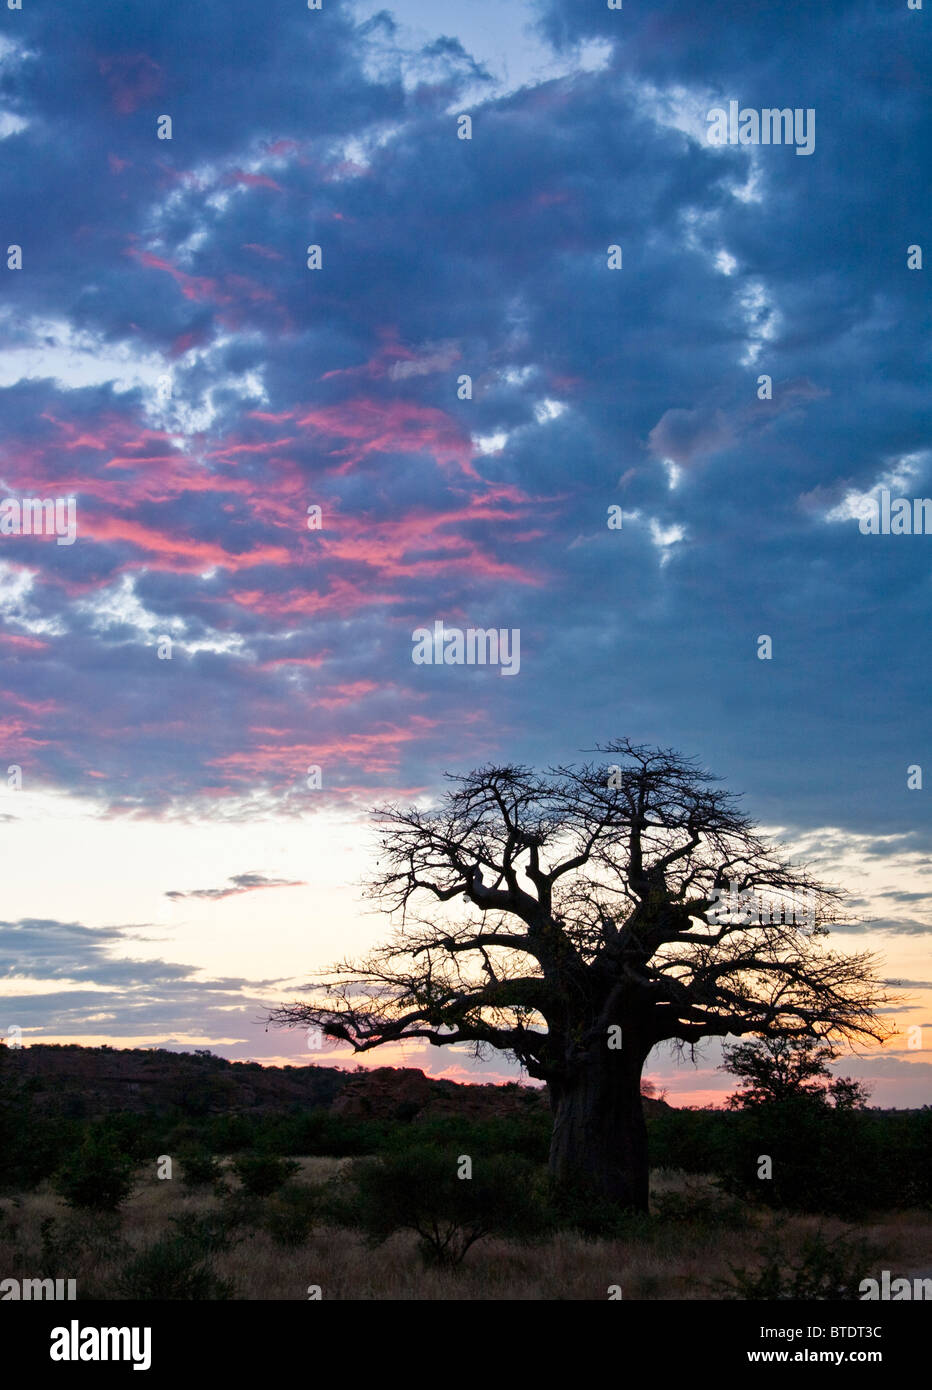 Moody Atardecer cielo detrás de un paisaje de sabana arbolada con un solitario árbol baobab Foto de stock